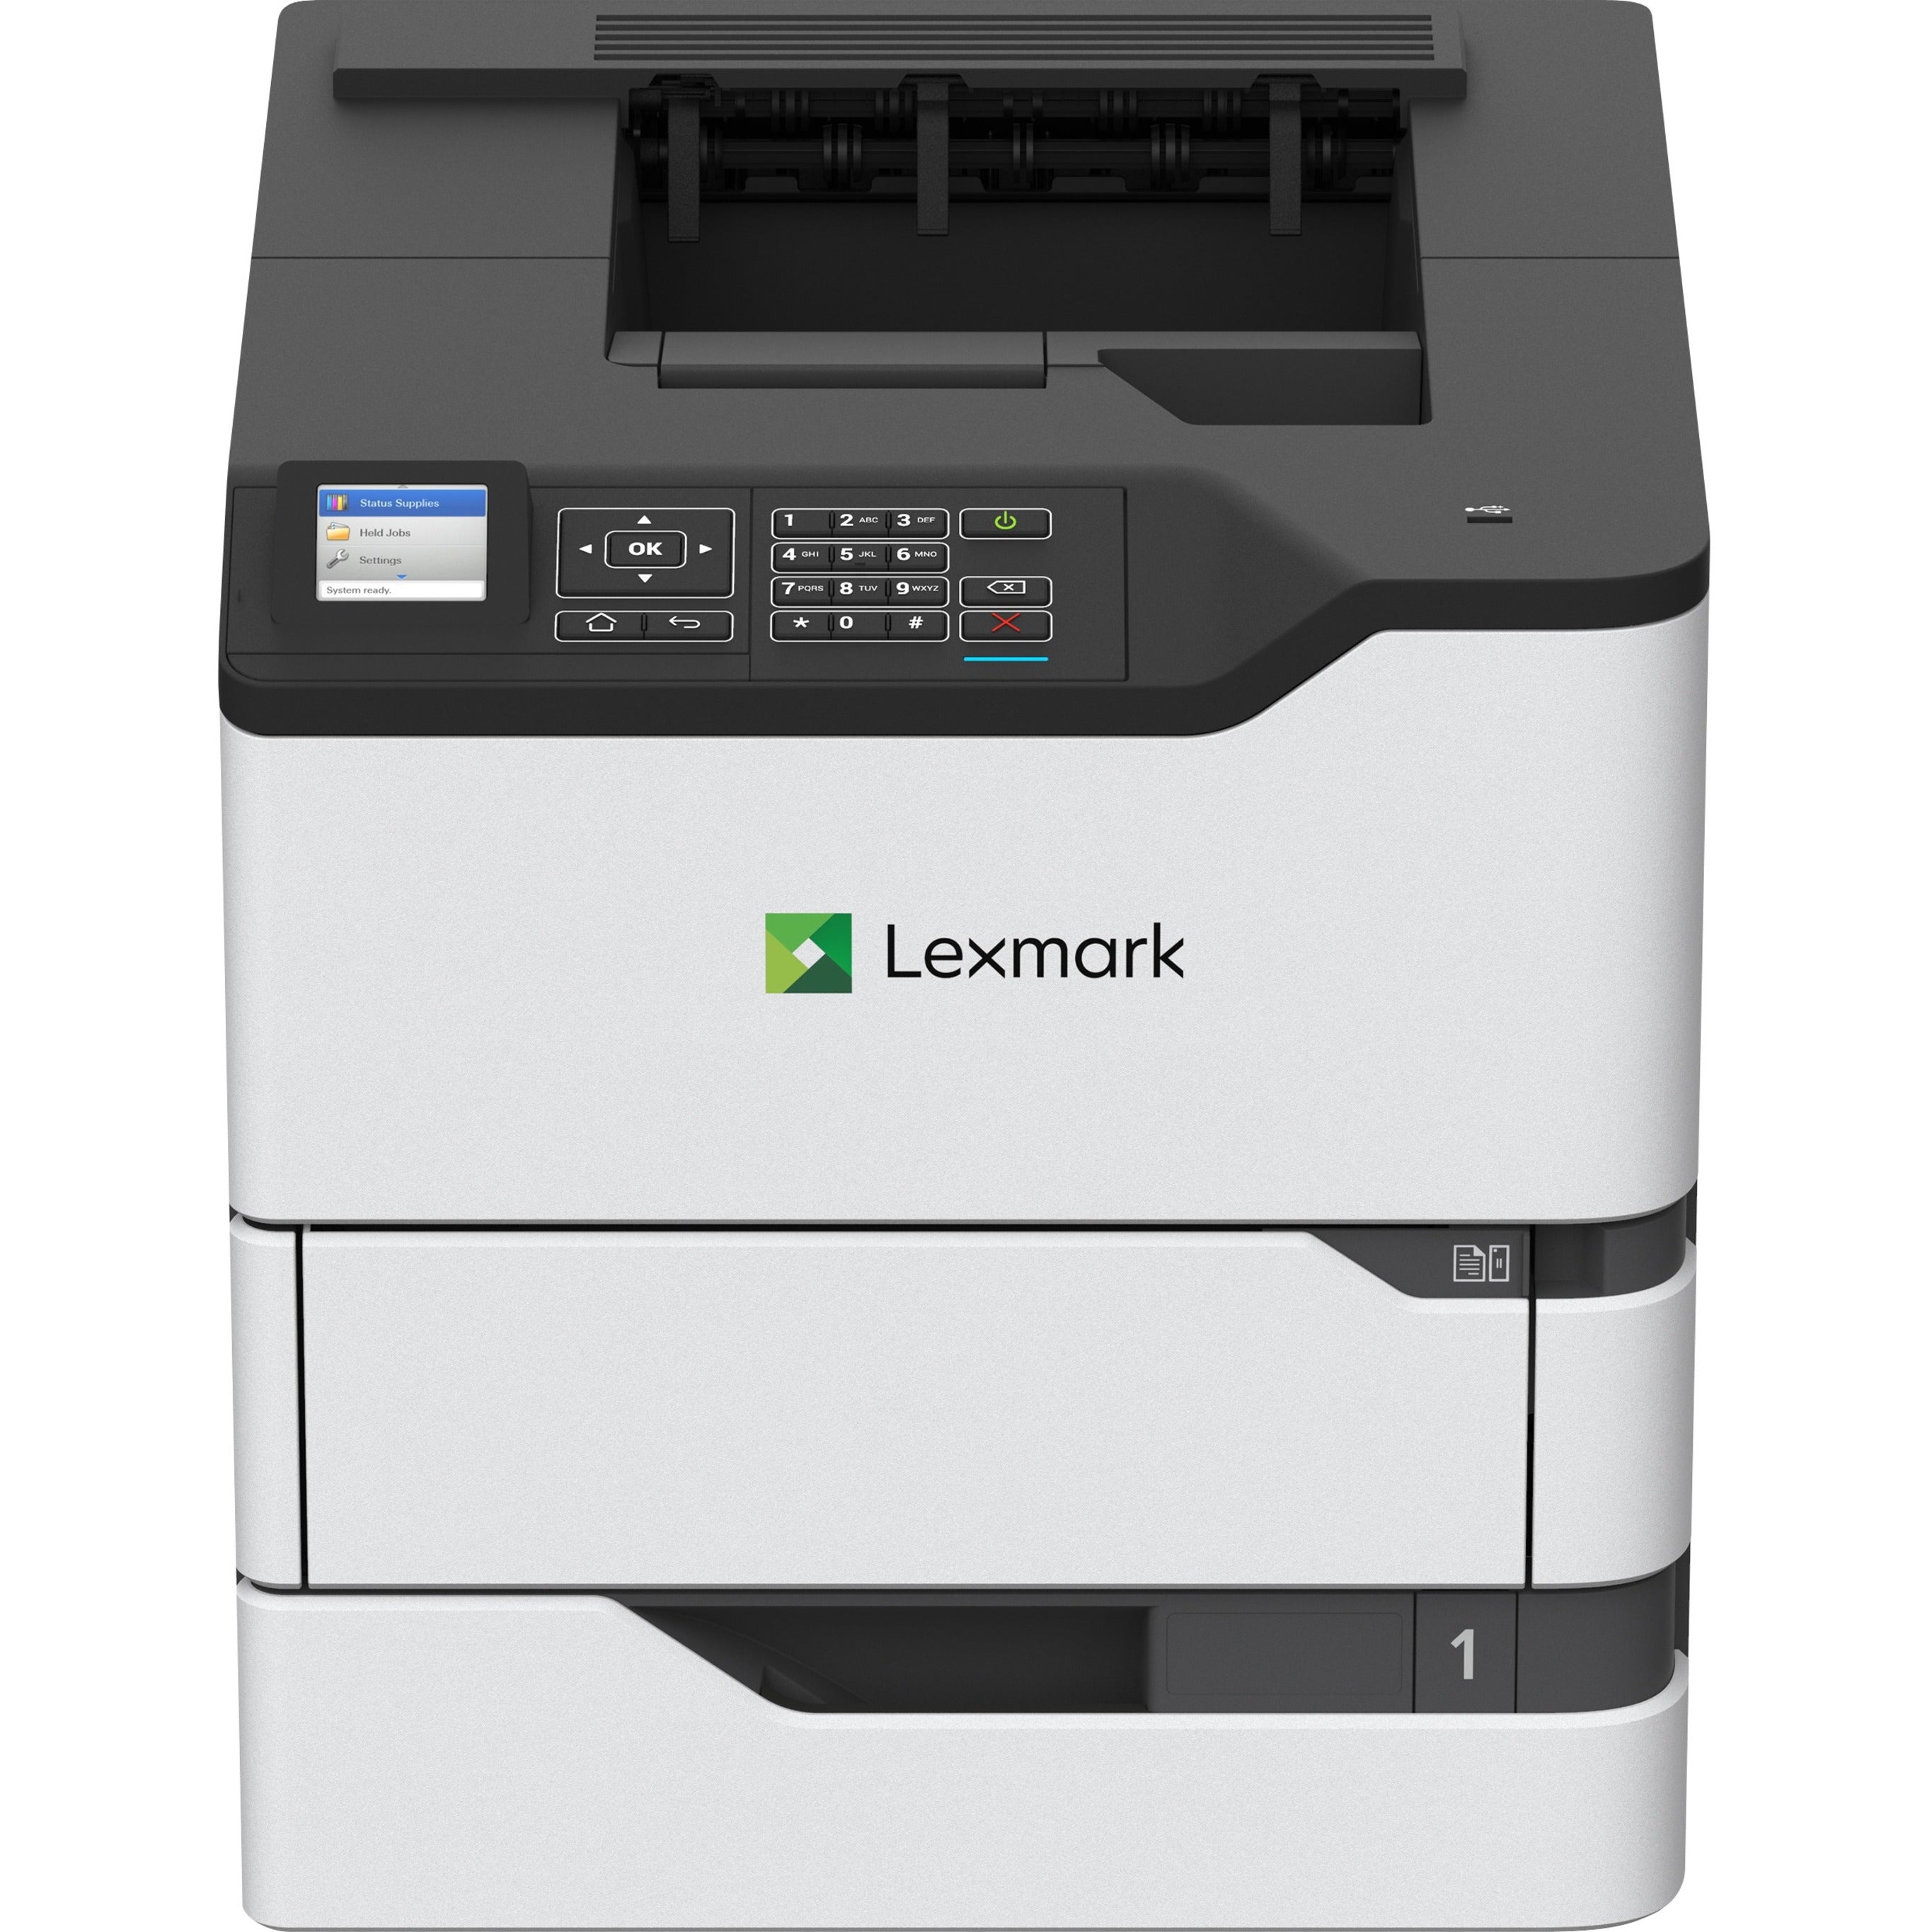 Lexmark 50GT220 MS823dn Desktop Laser Printer - Monochrome, 65 ppm, Automatic Duplex Printing, 1200 x 1200 dpi